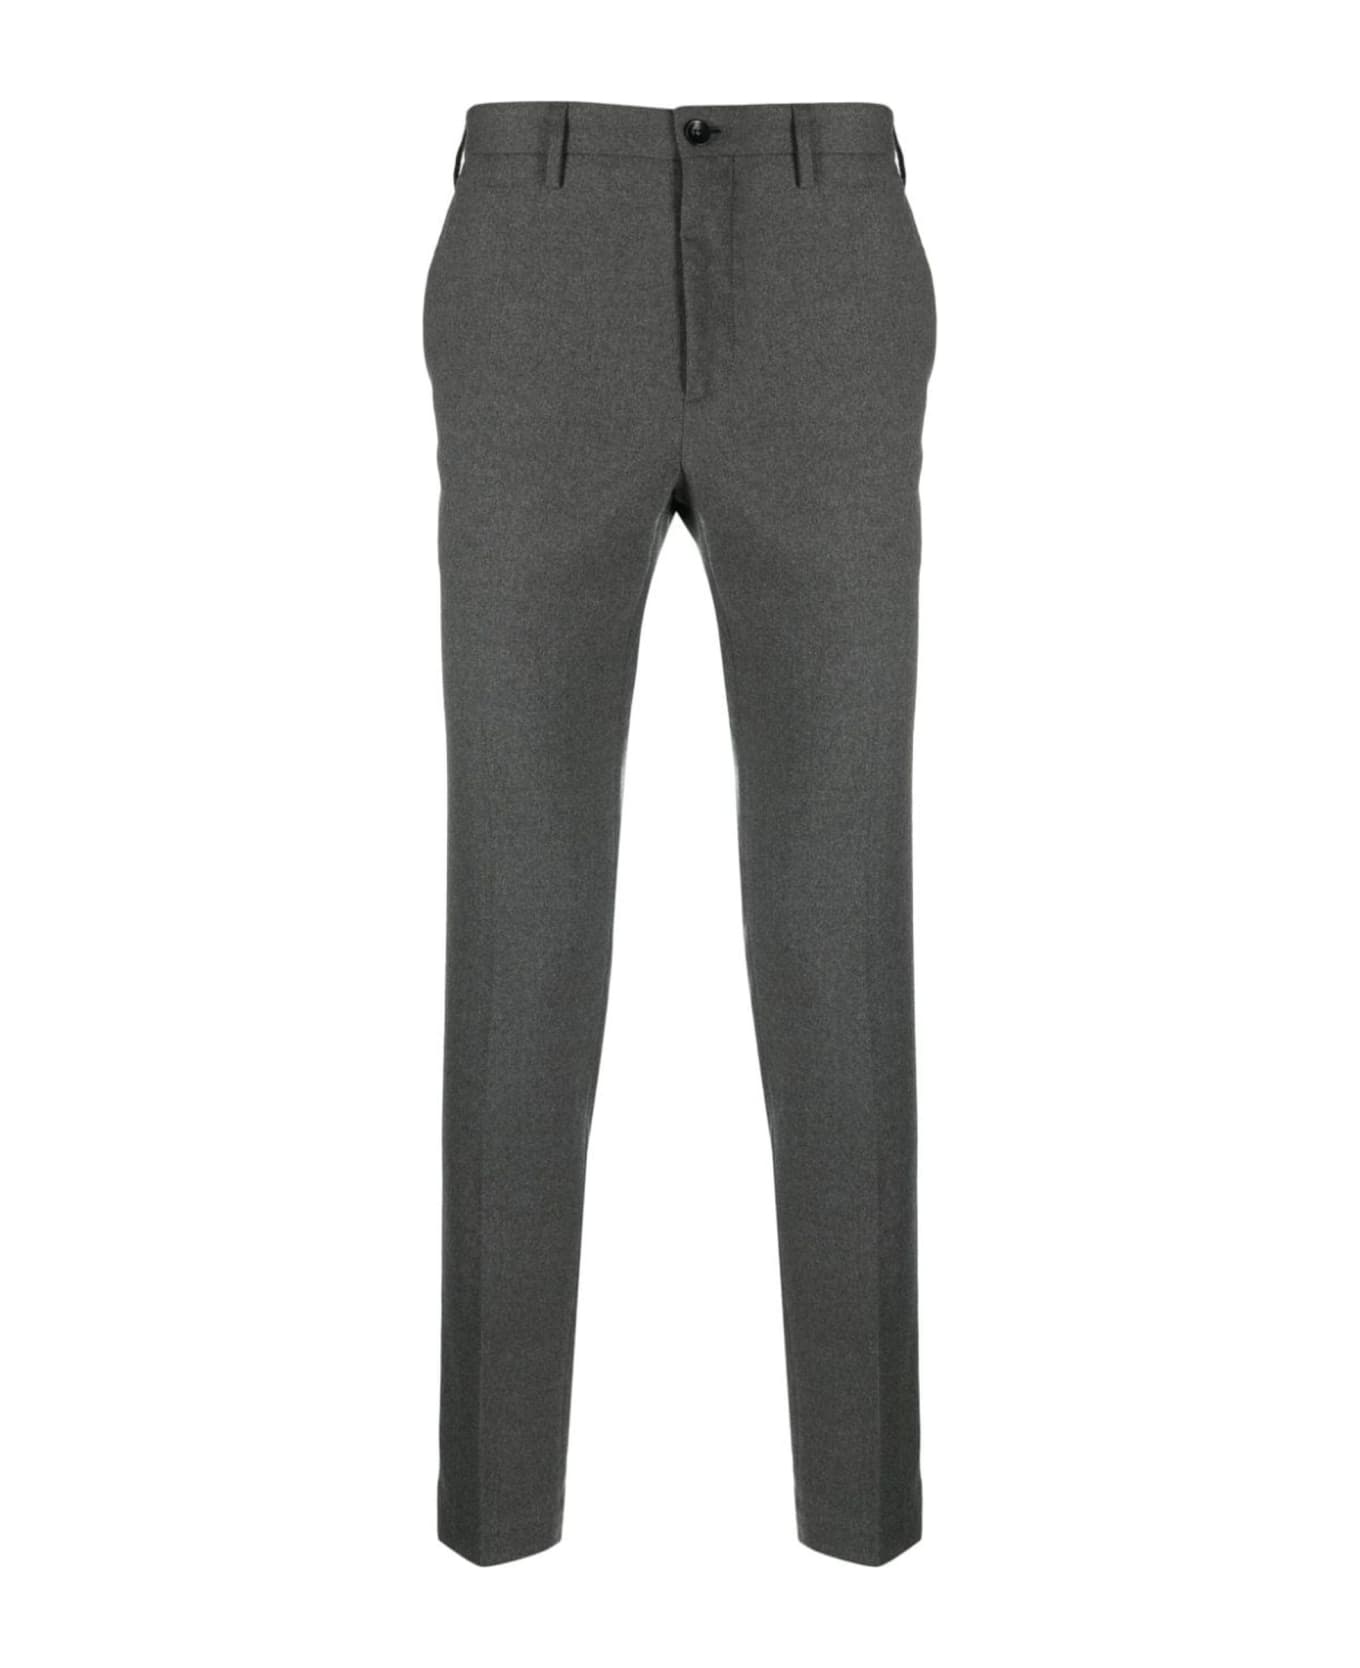 Incotex Dark Grey Wool Blend Trousers - Grey ボトムス